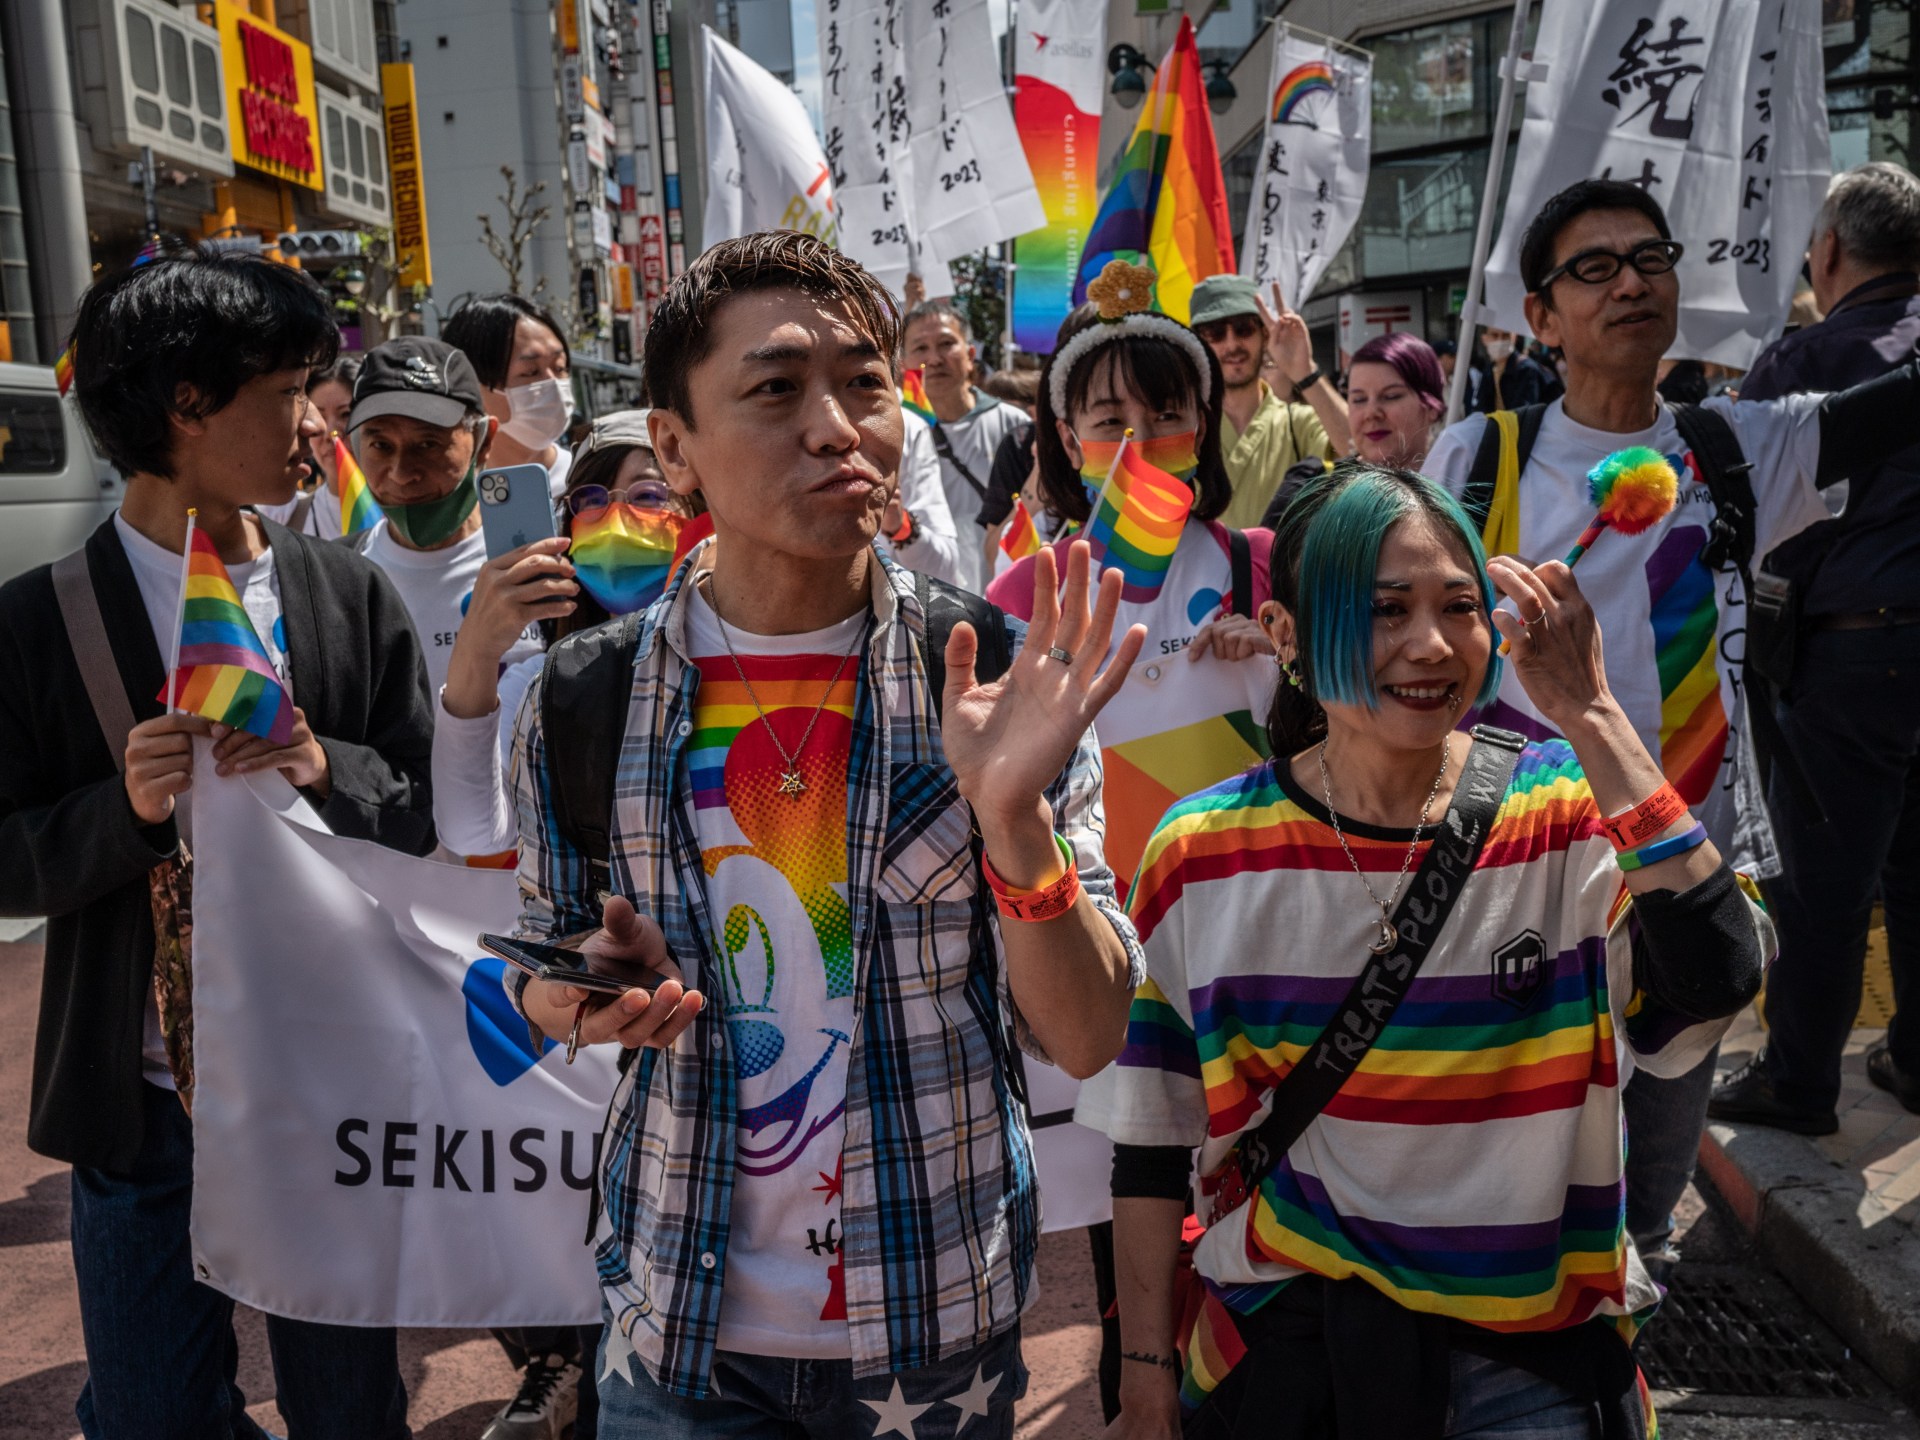 Pengkampanye melihat harapan dalam keputusan Jepang tentang pernikahan sesama jenis |  Berita LGBTQ